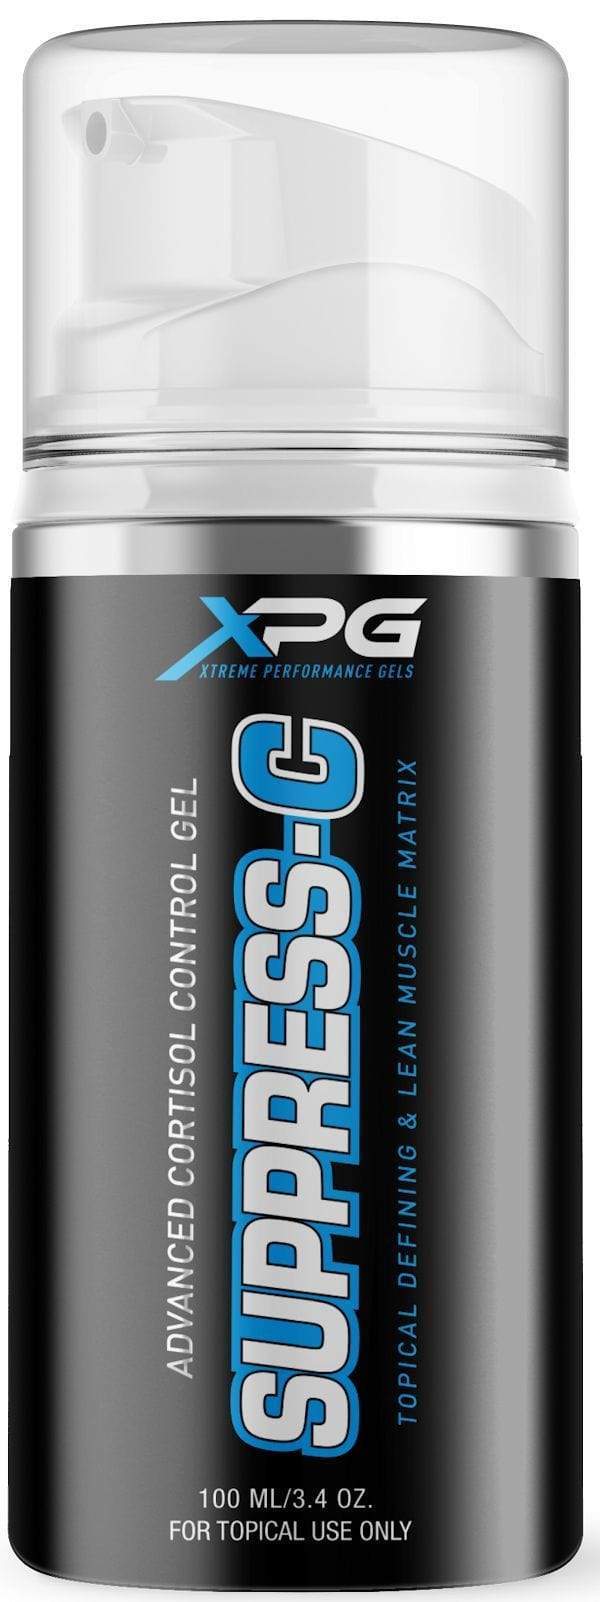 XPG Topical Cream Xtreme Performance Gels Suppress-C